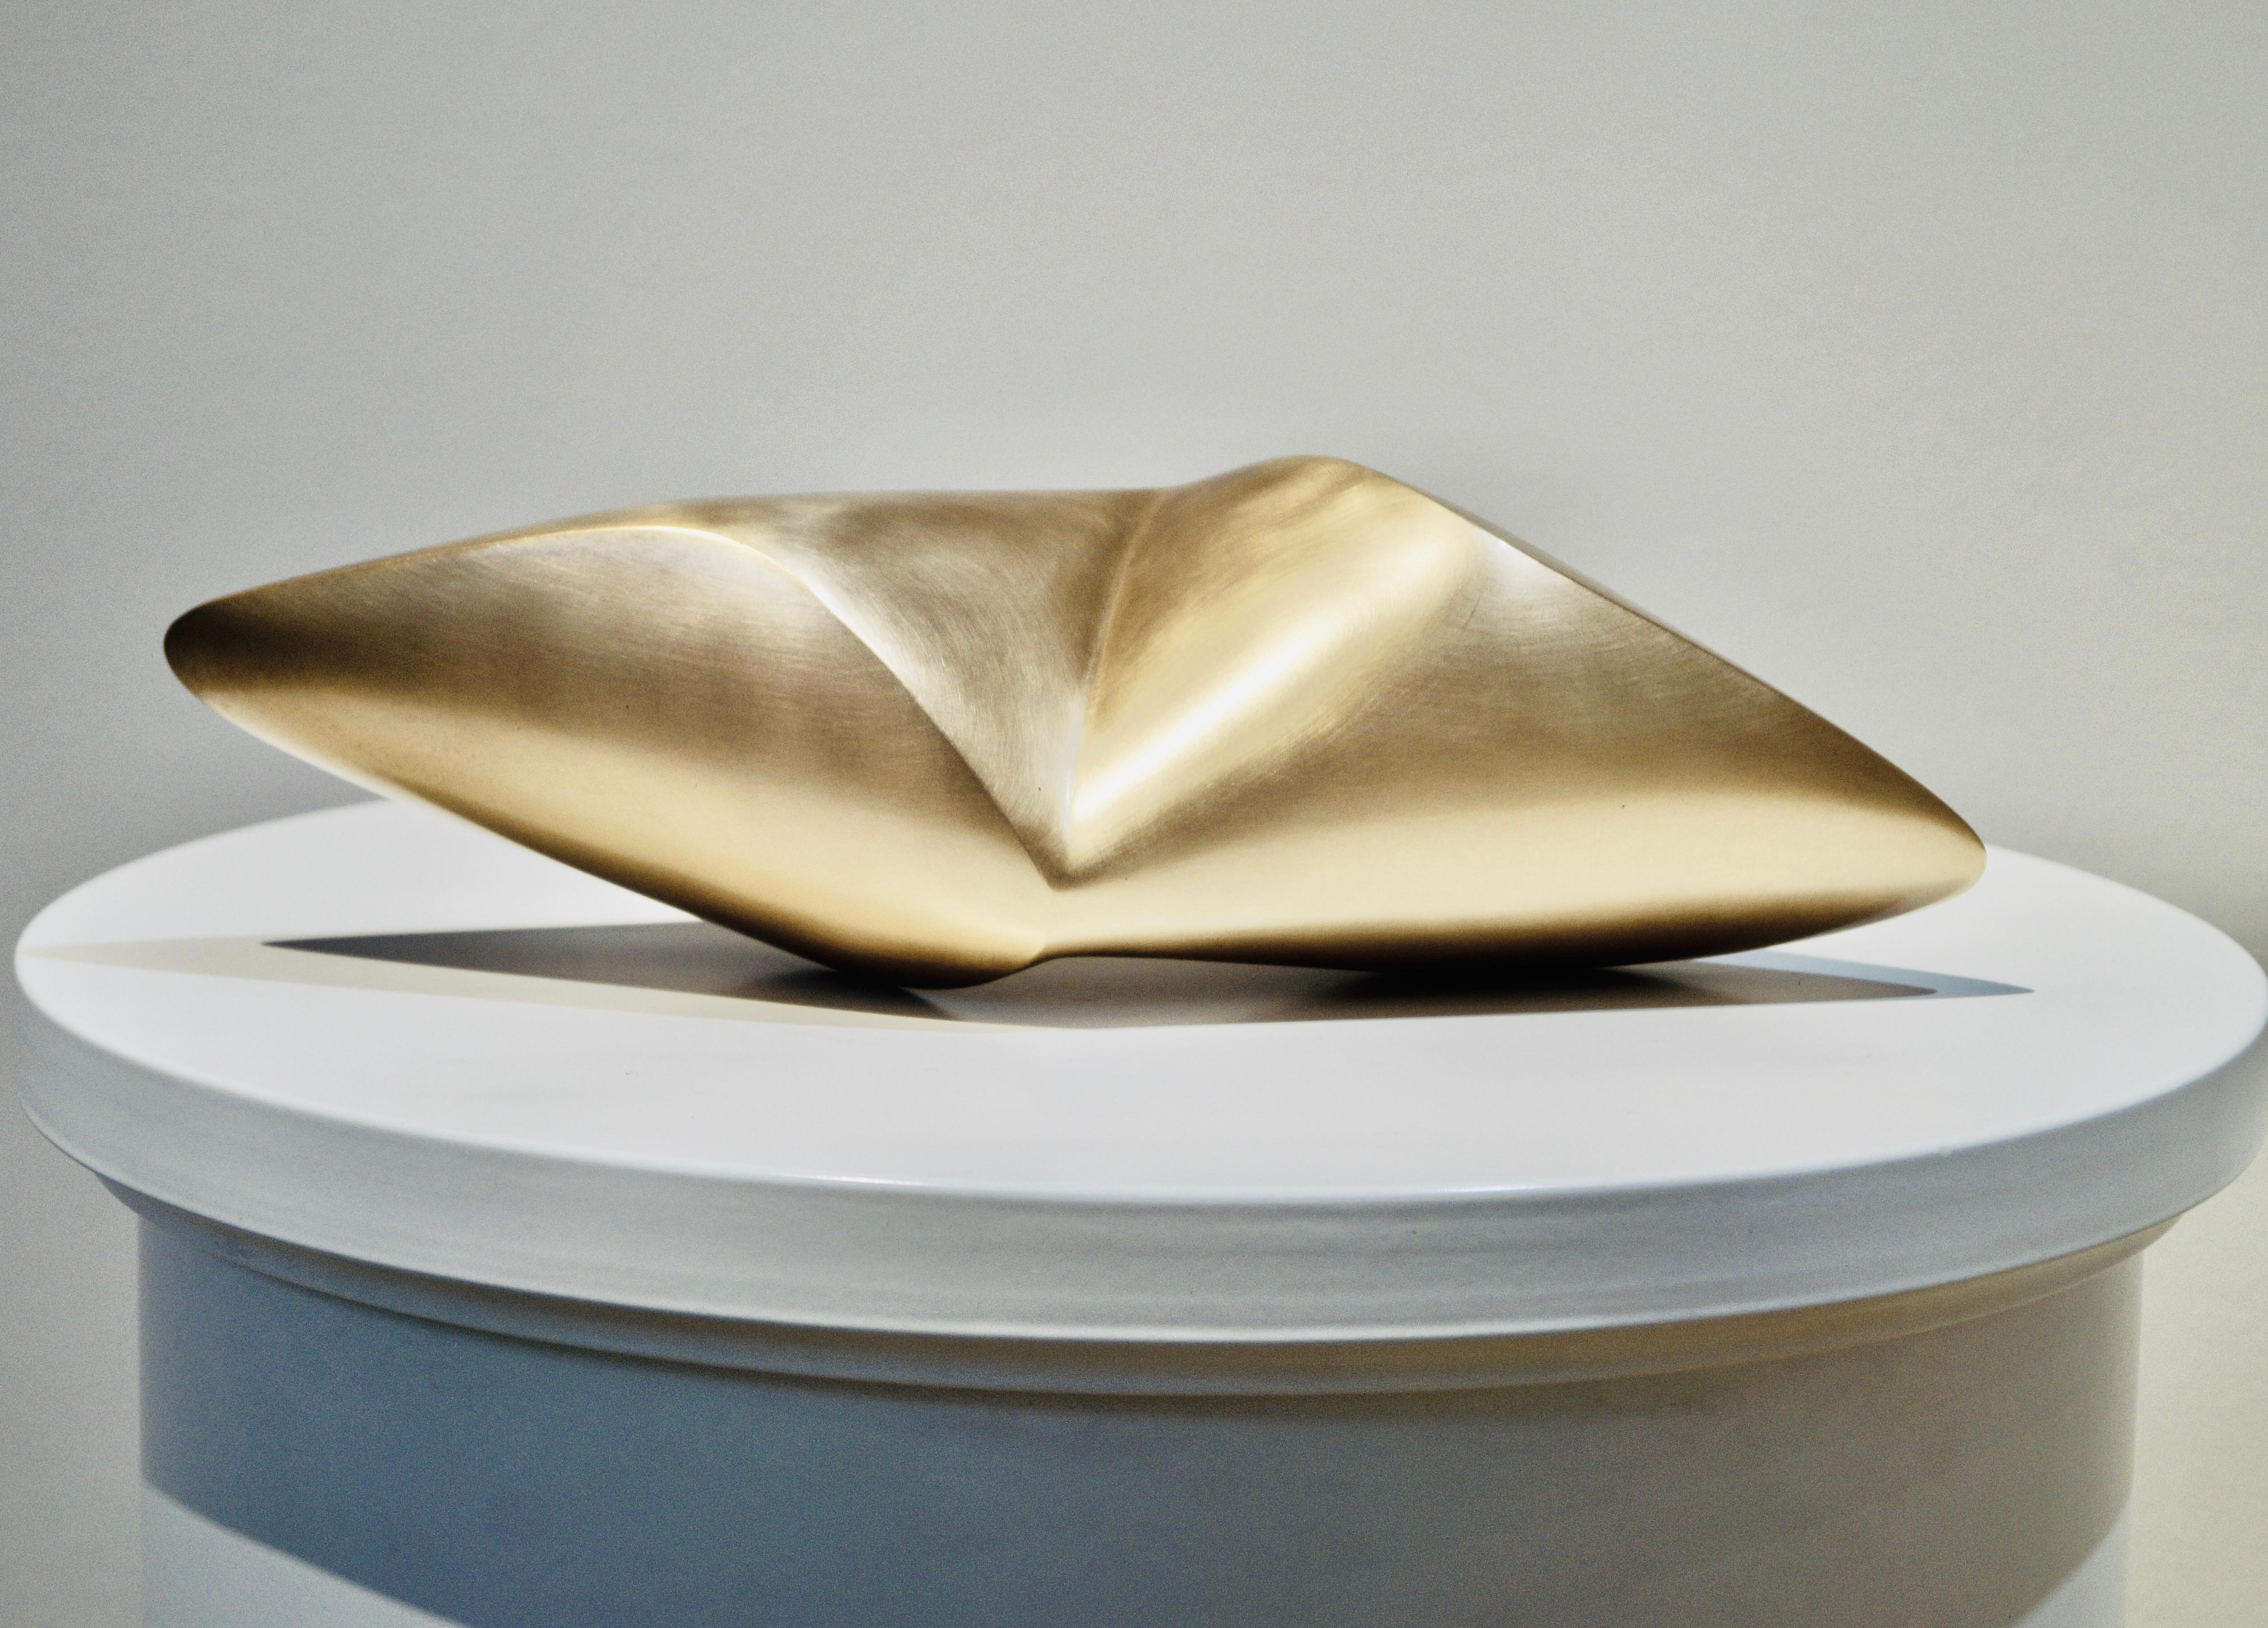 Maximilian Verhas Abstract Sculpture - Stretched Pillow, 2014, Bronze, sculpture, contemporary, 